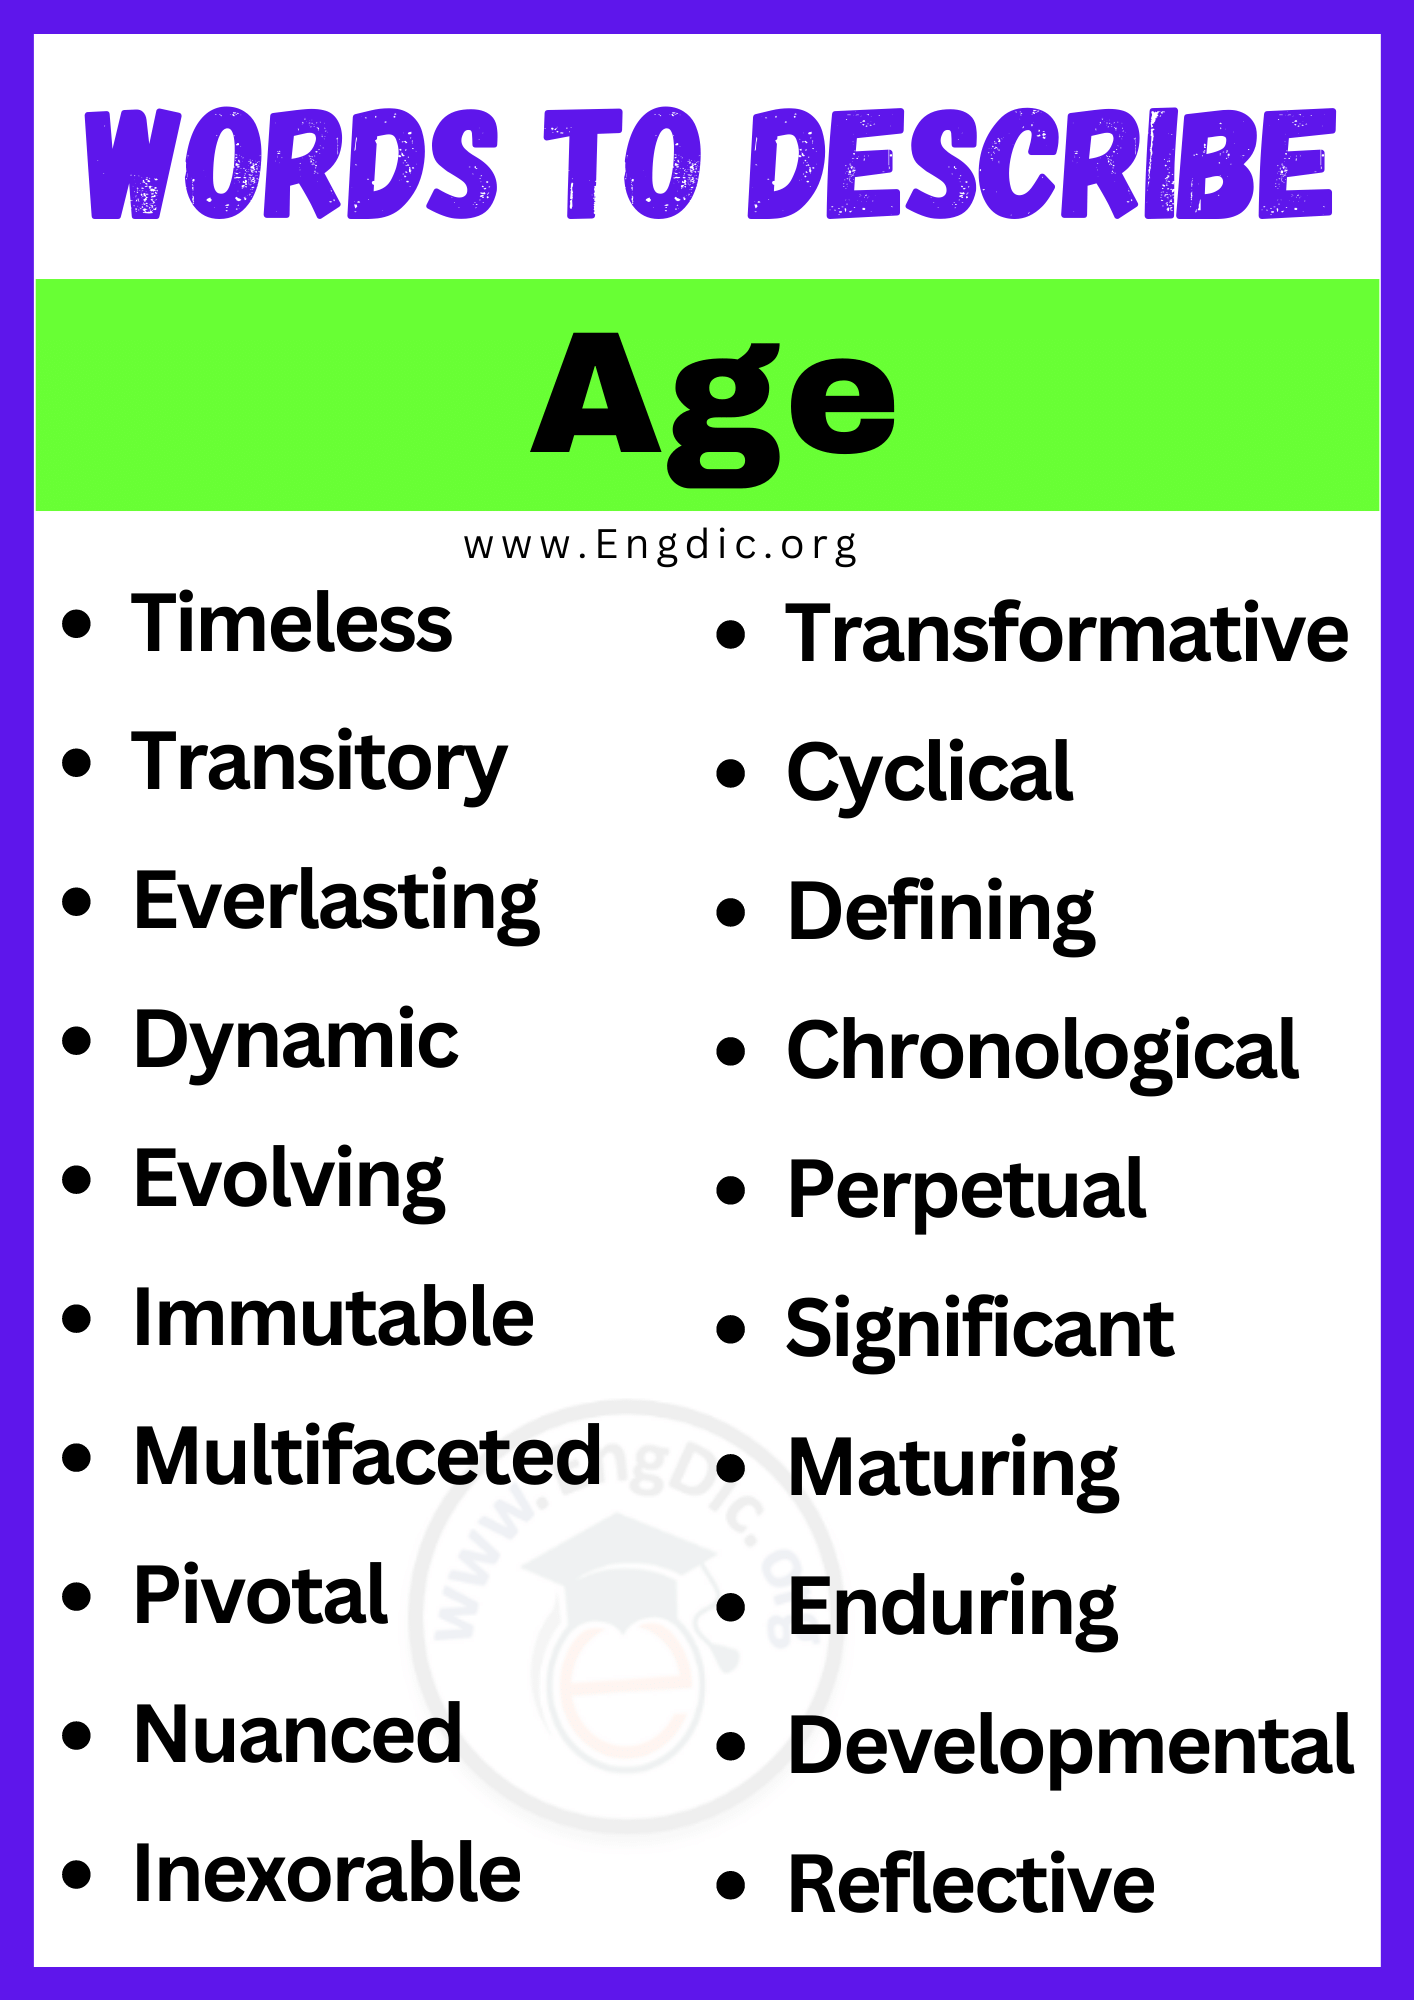 Words to Describe Age